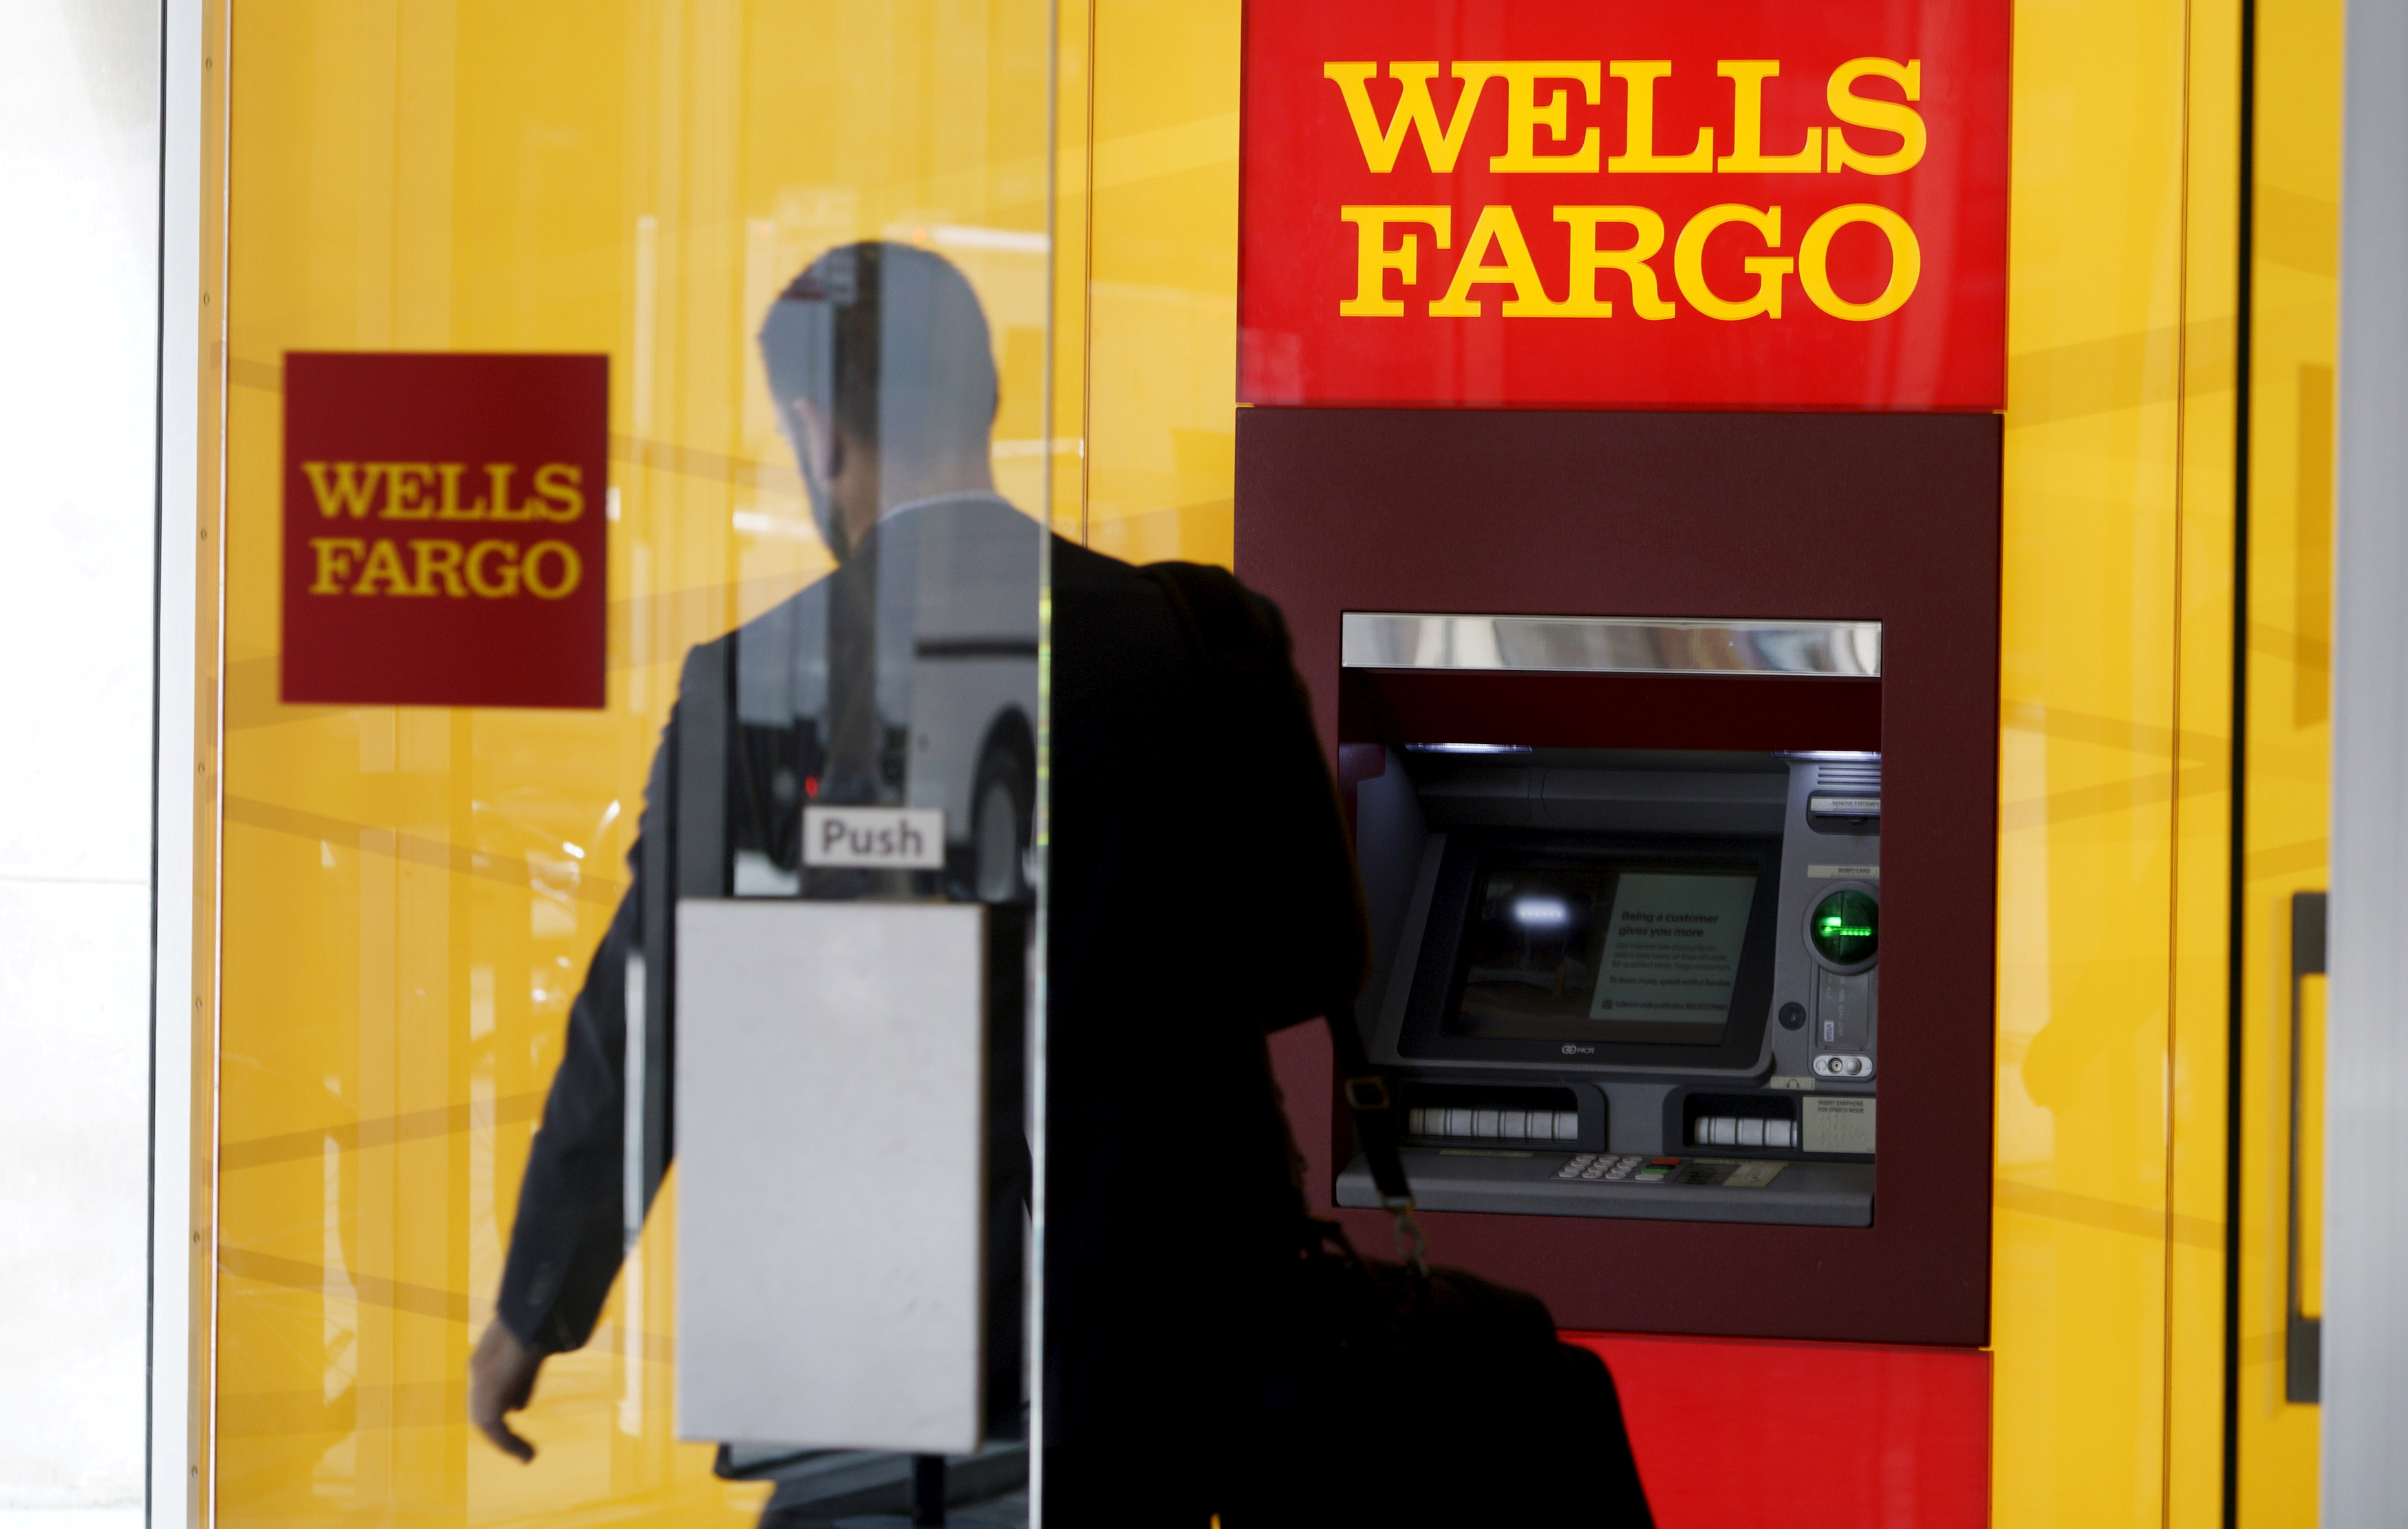 U.S. Senate banking panel urges Wells Fargo to 'finally' fix problems